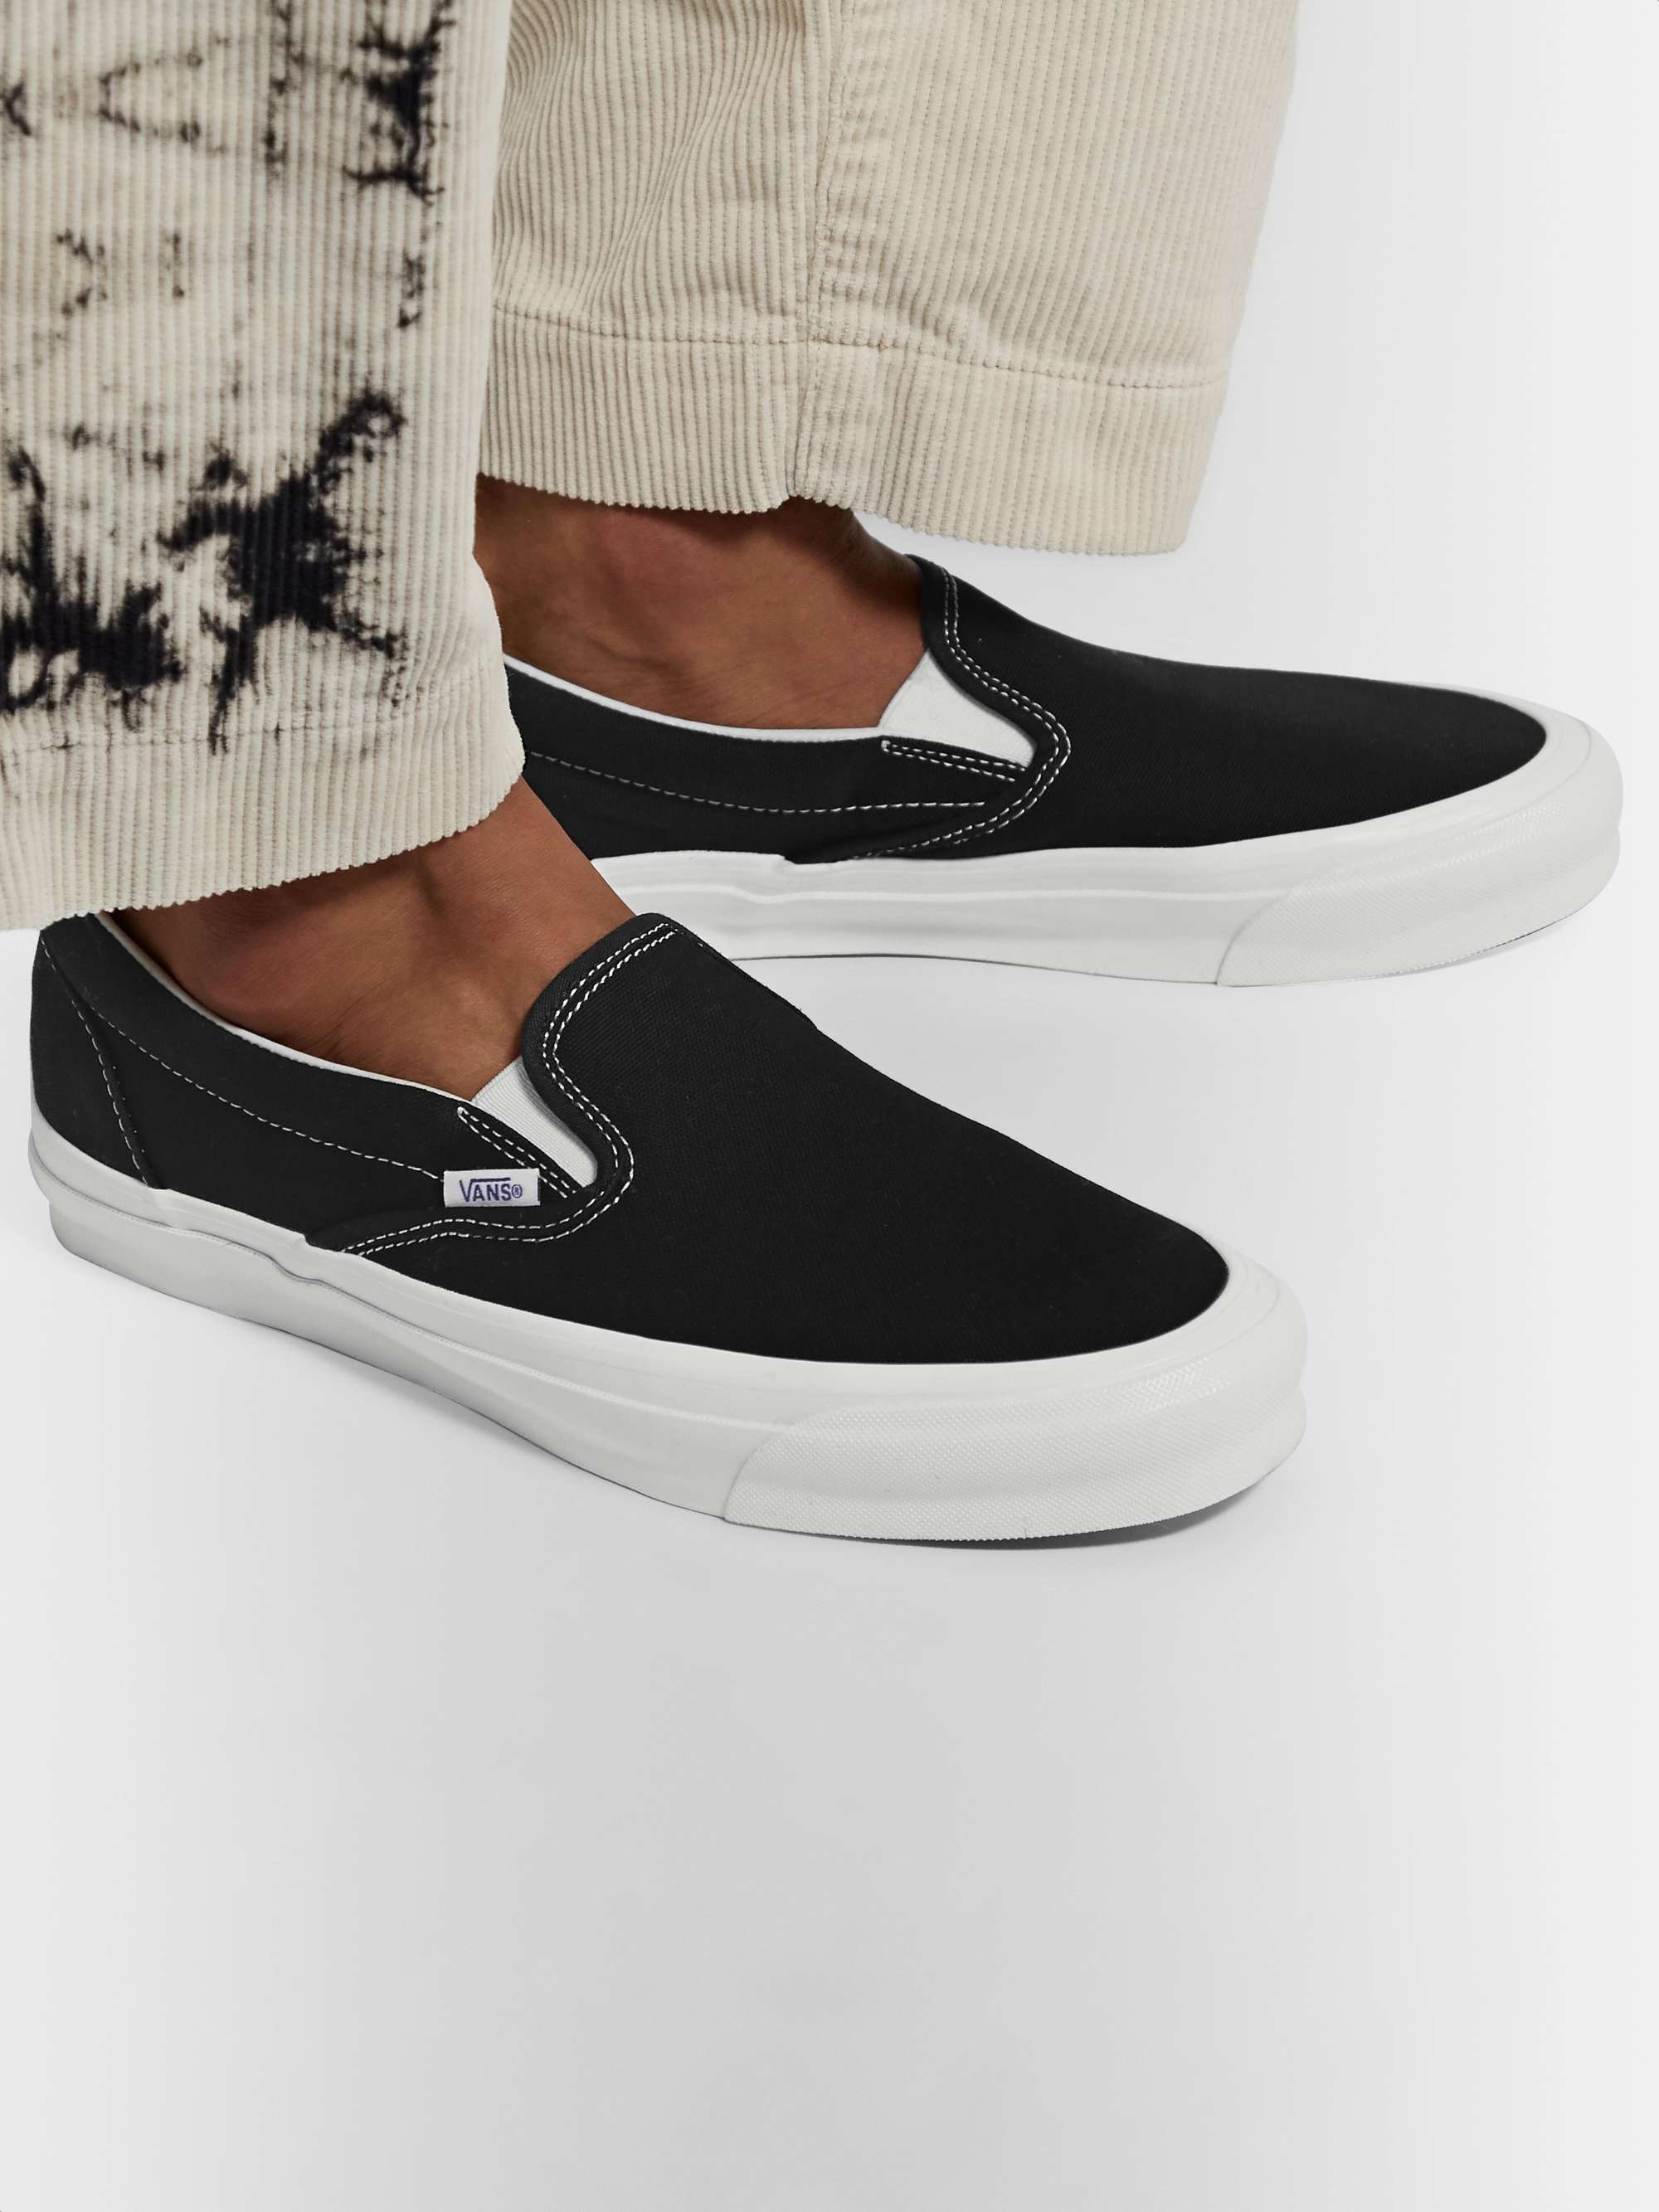 Black OG Classic LX Canvas Sneakers | VANS | MR PORTER